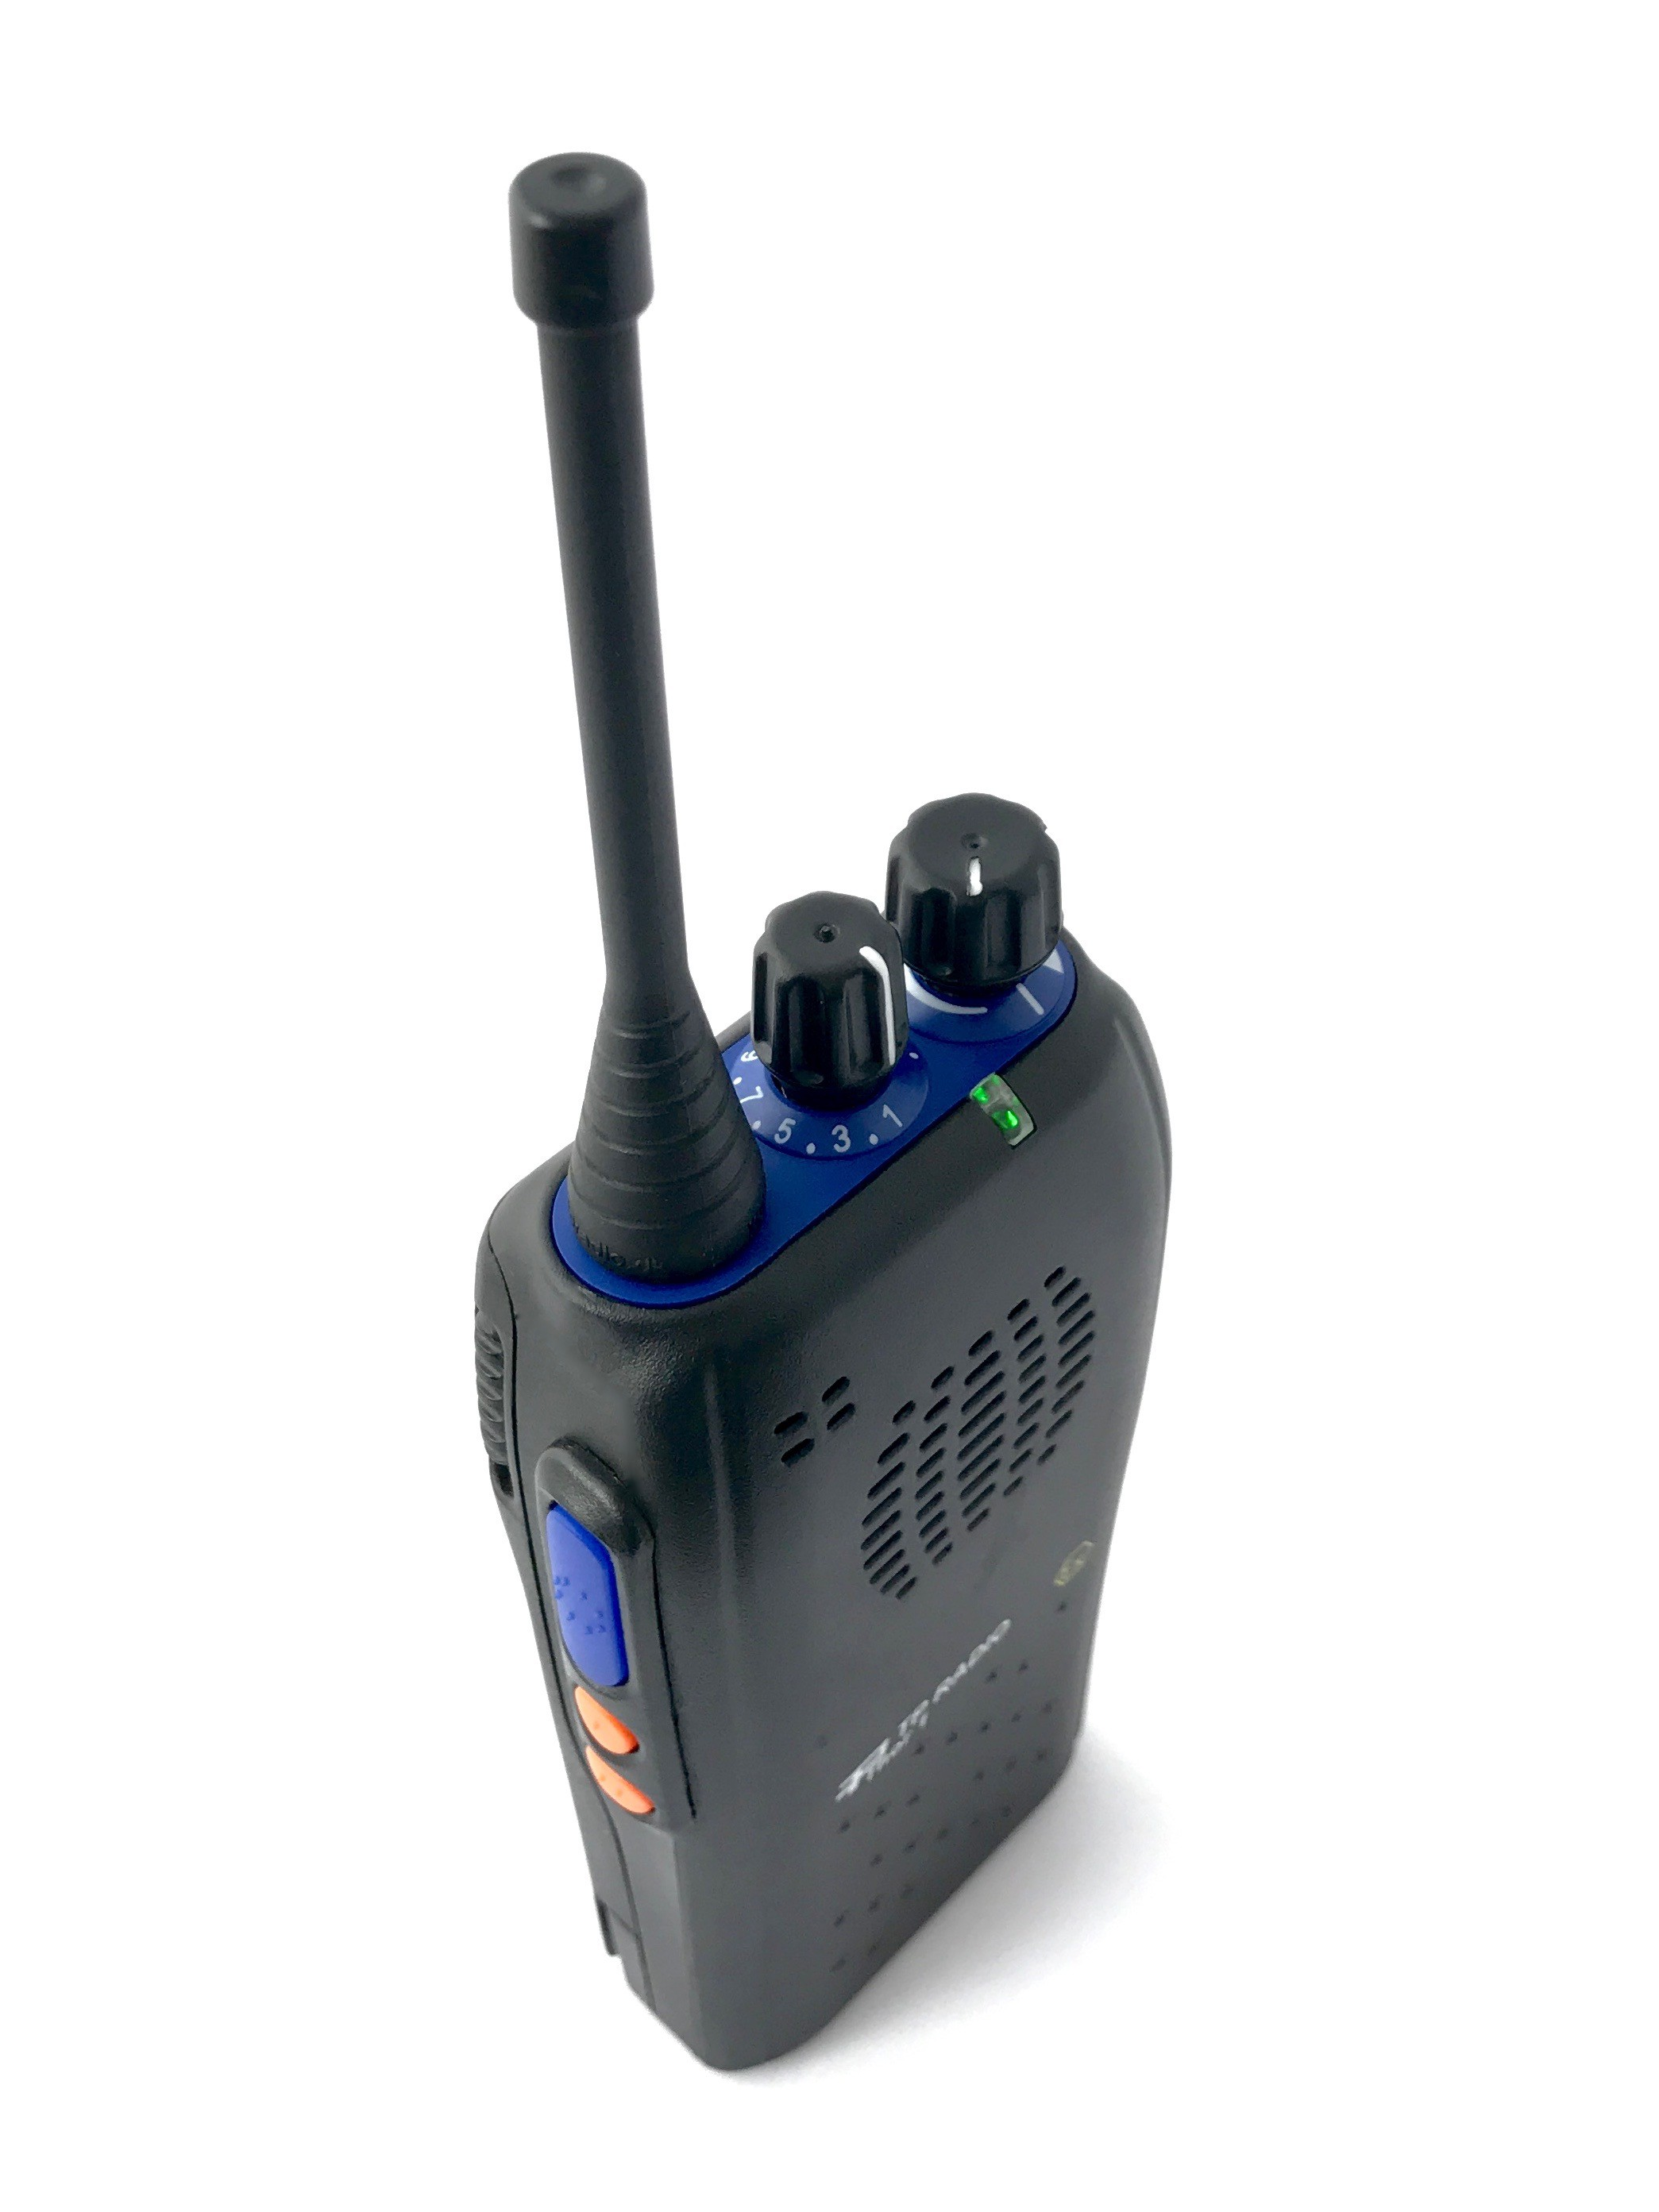 TP9000 THOR1 EX VHF